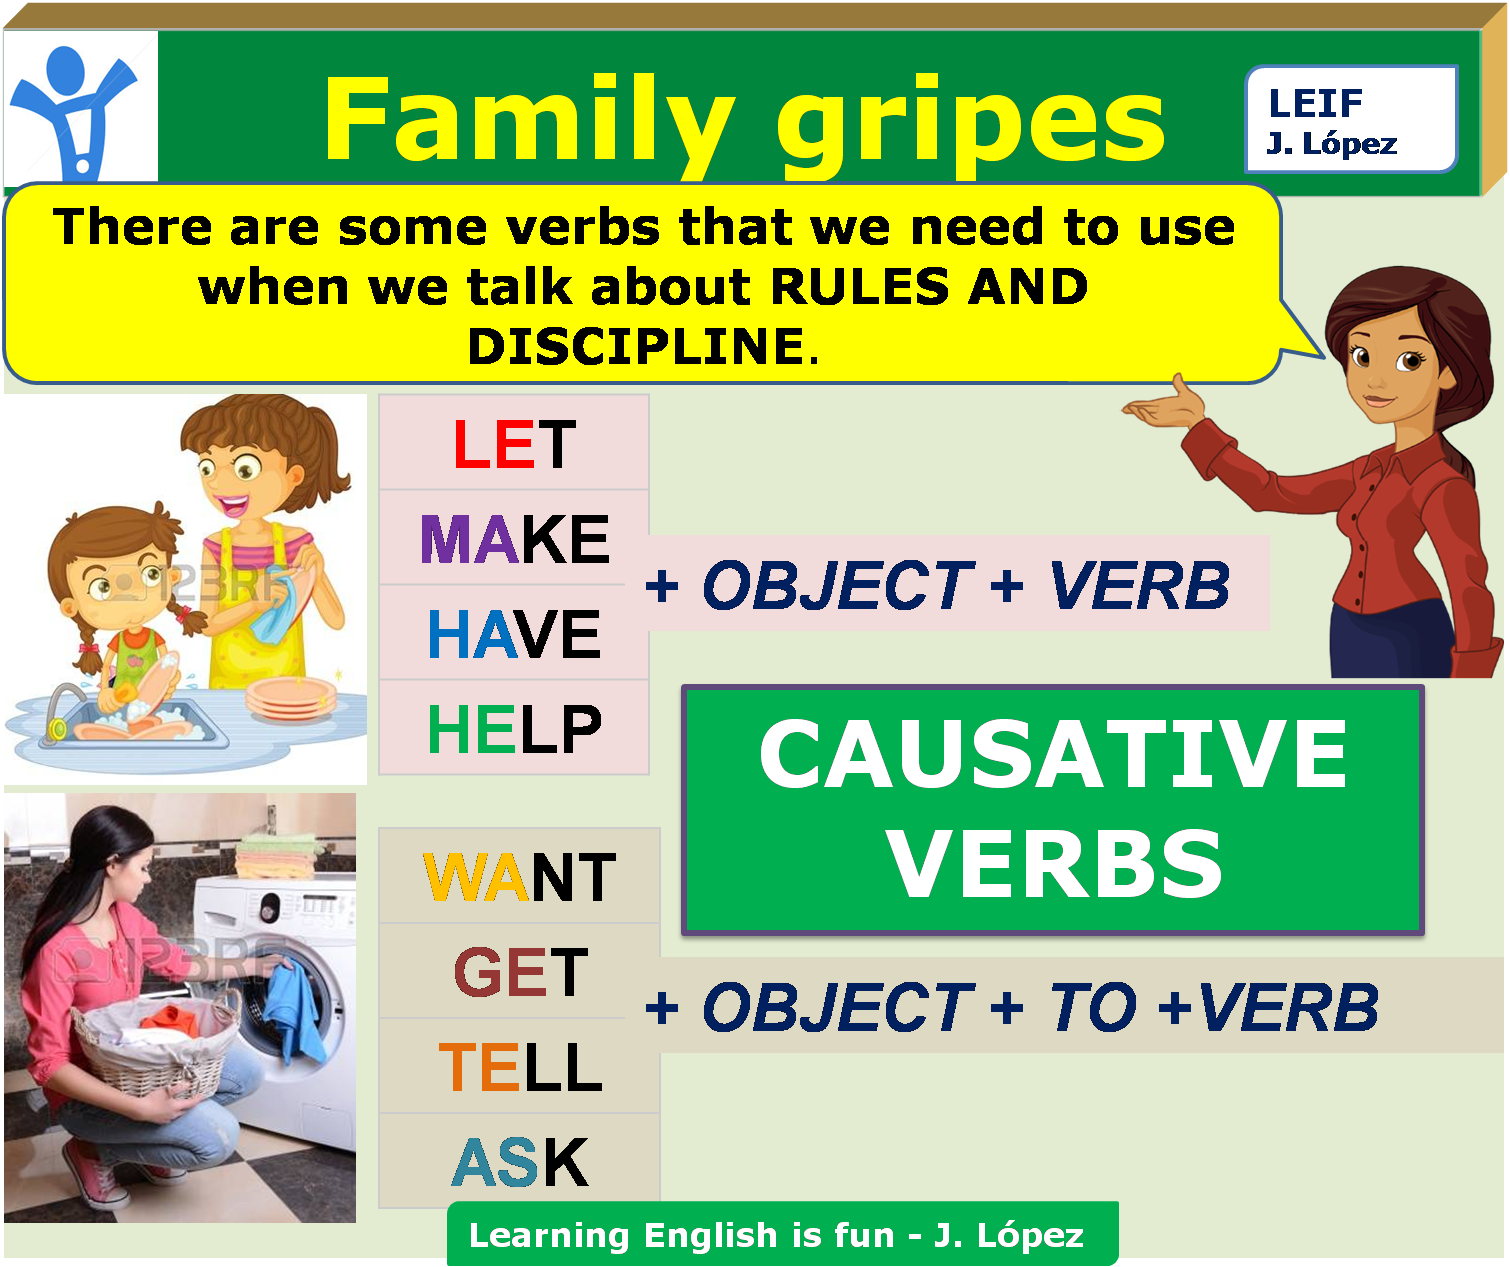 English verbs intermediate. Causative verbs. Make get have правило. Causative verbs в английском языке. Каузативные глаголы.